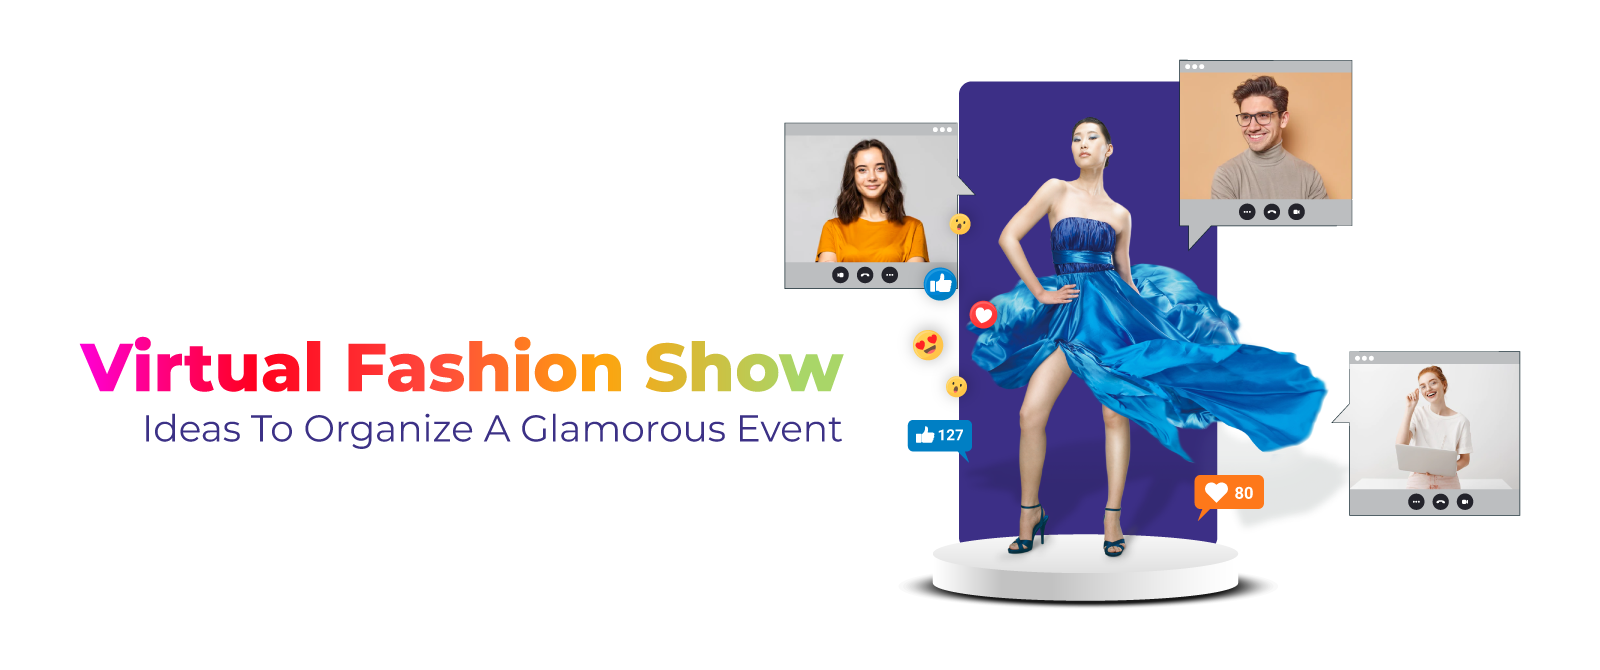 Creative Virtual Fashion Show Ideas to Organize a Glamorous Event